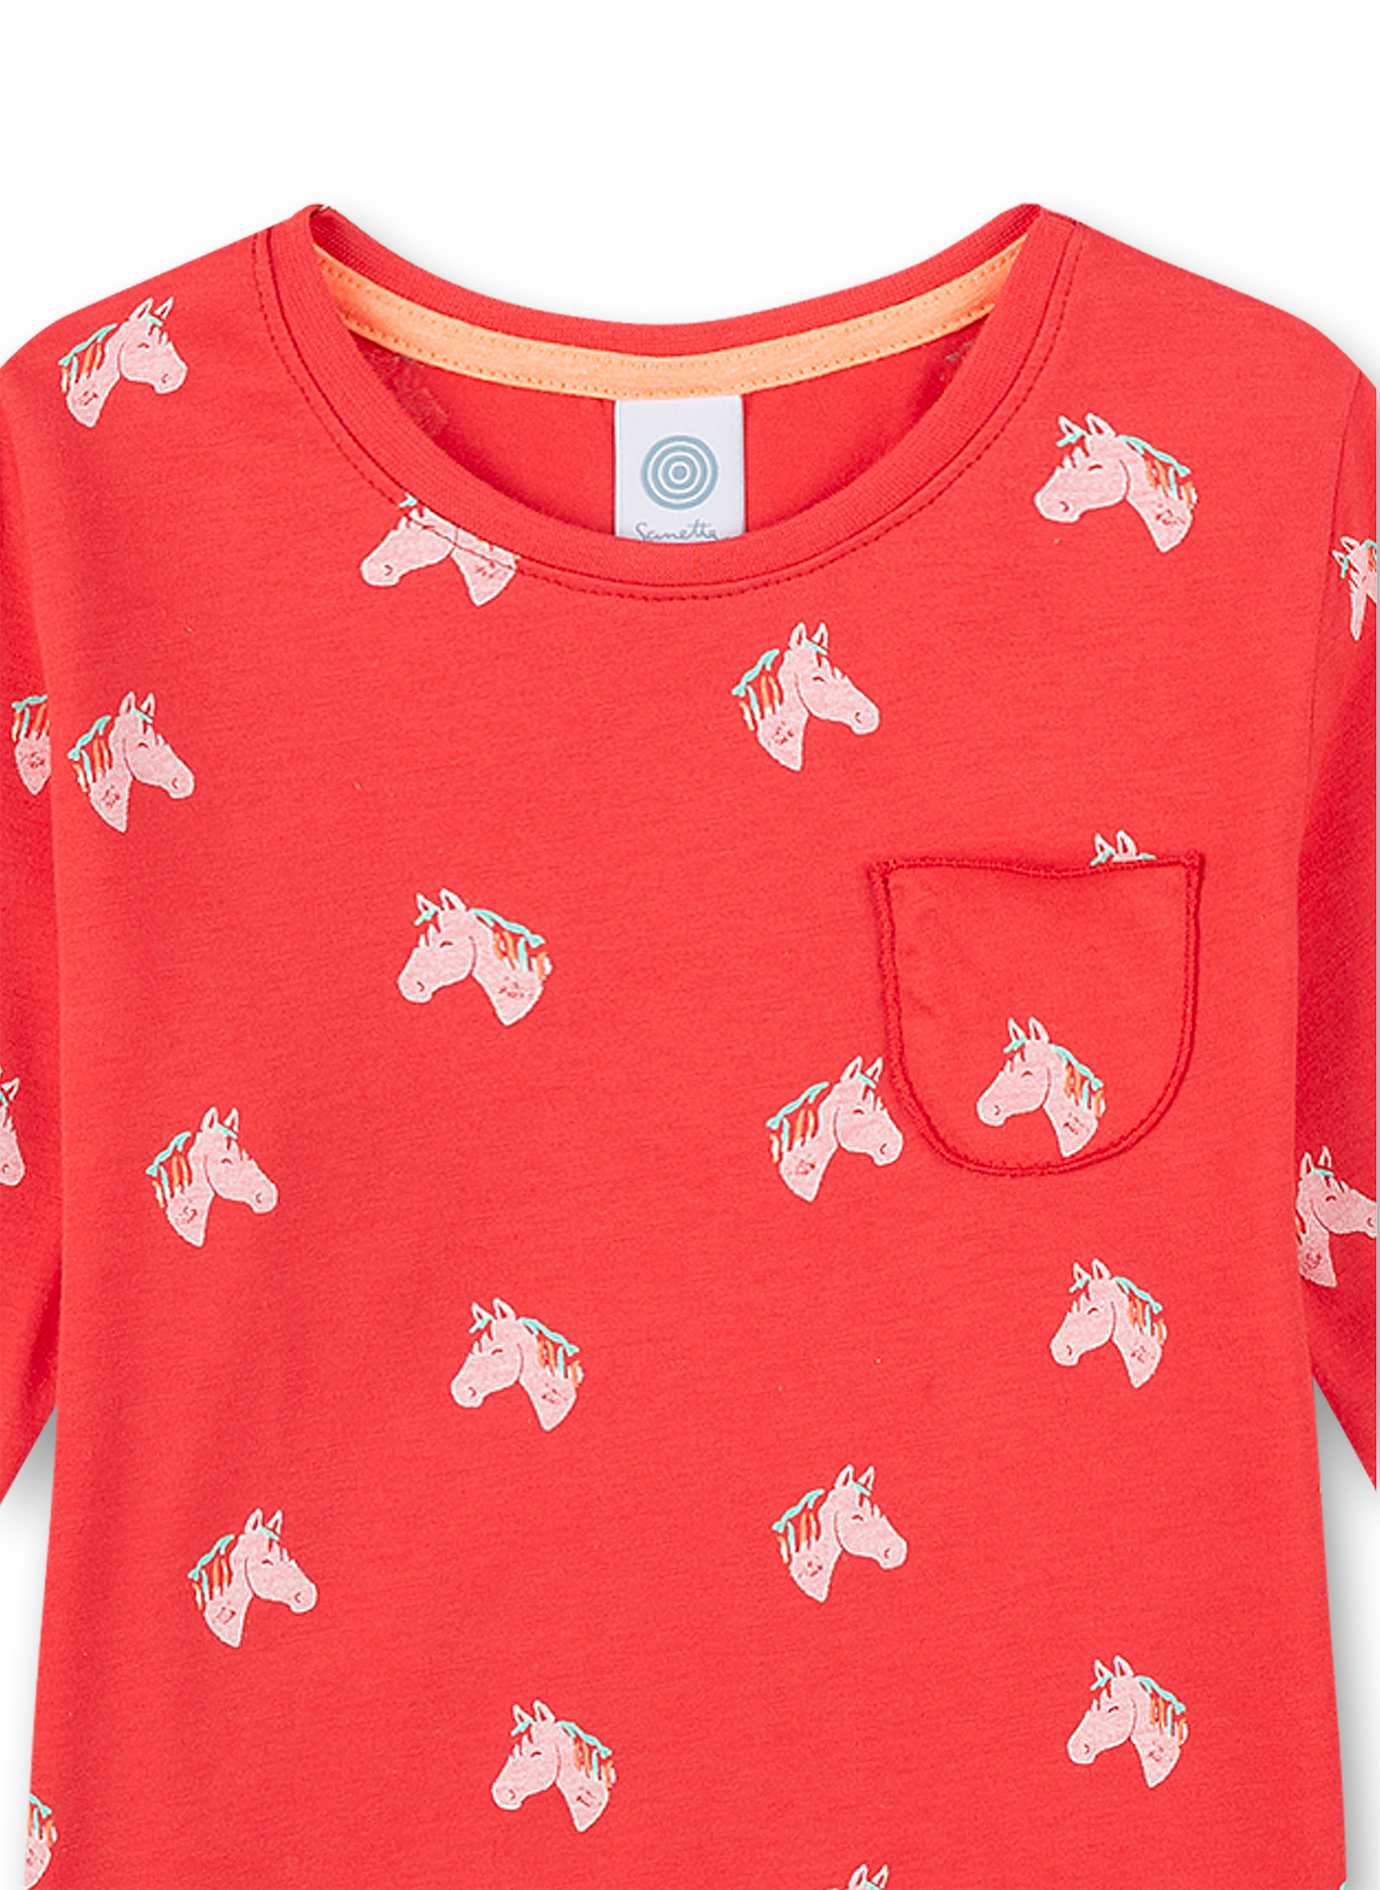 Mädchen-Schlafanzug lang Rot Happy Horse